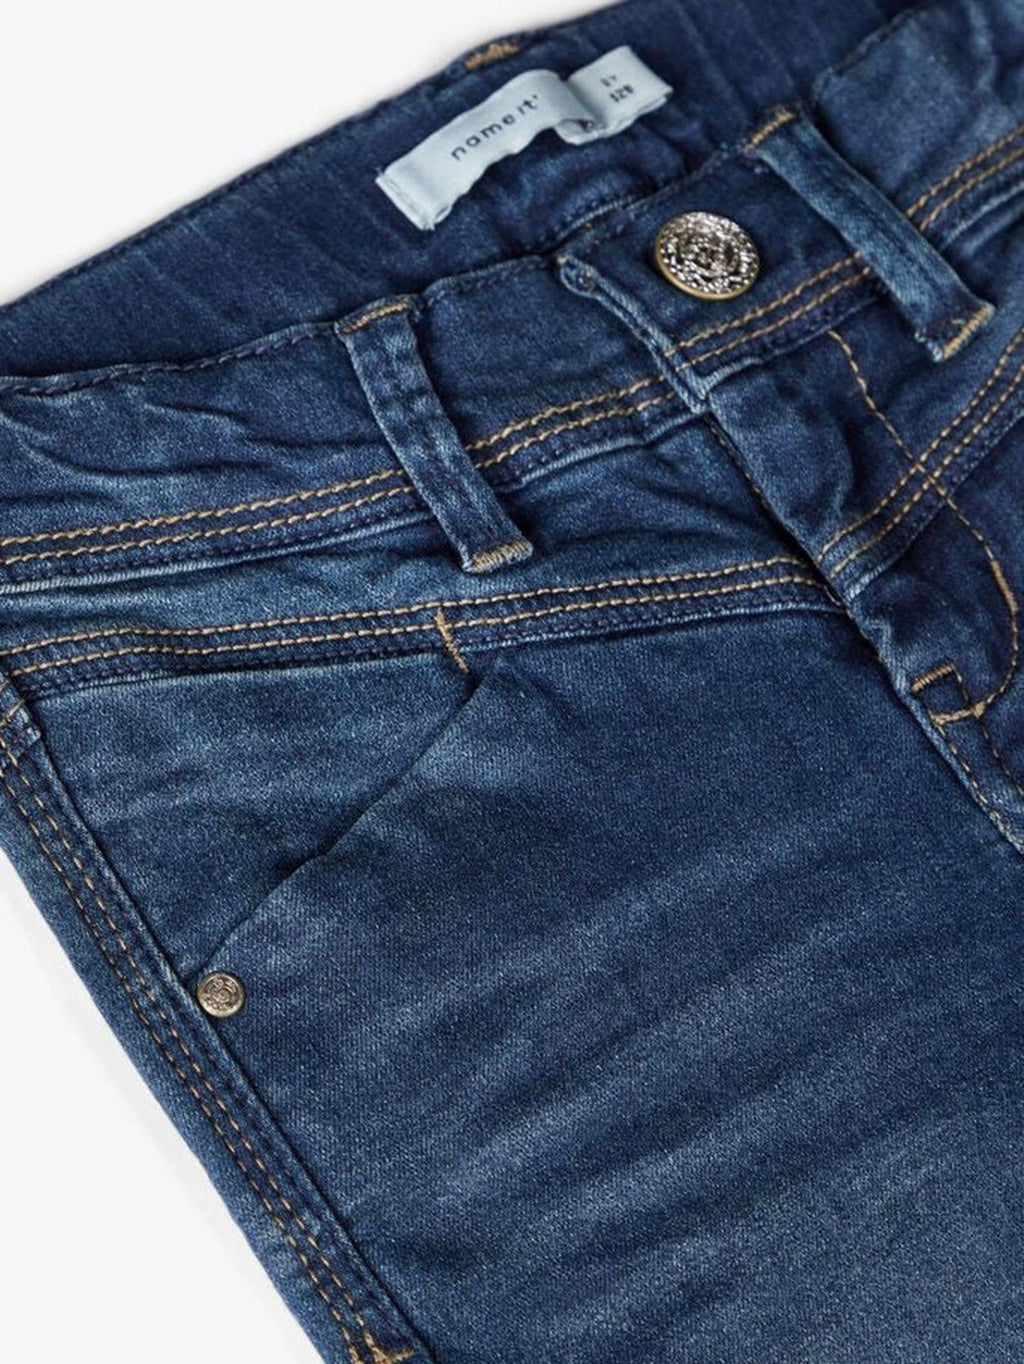 Jeans skinny fit - denim blu scuro